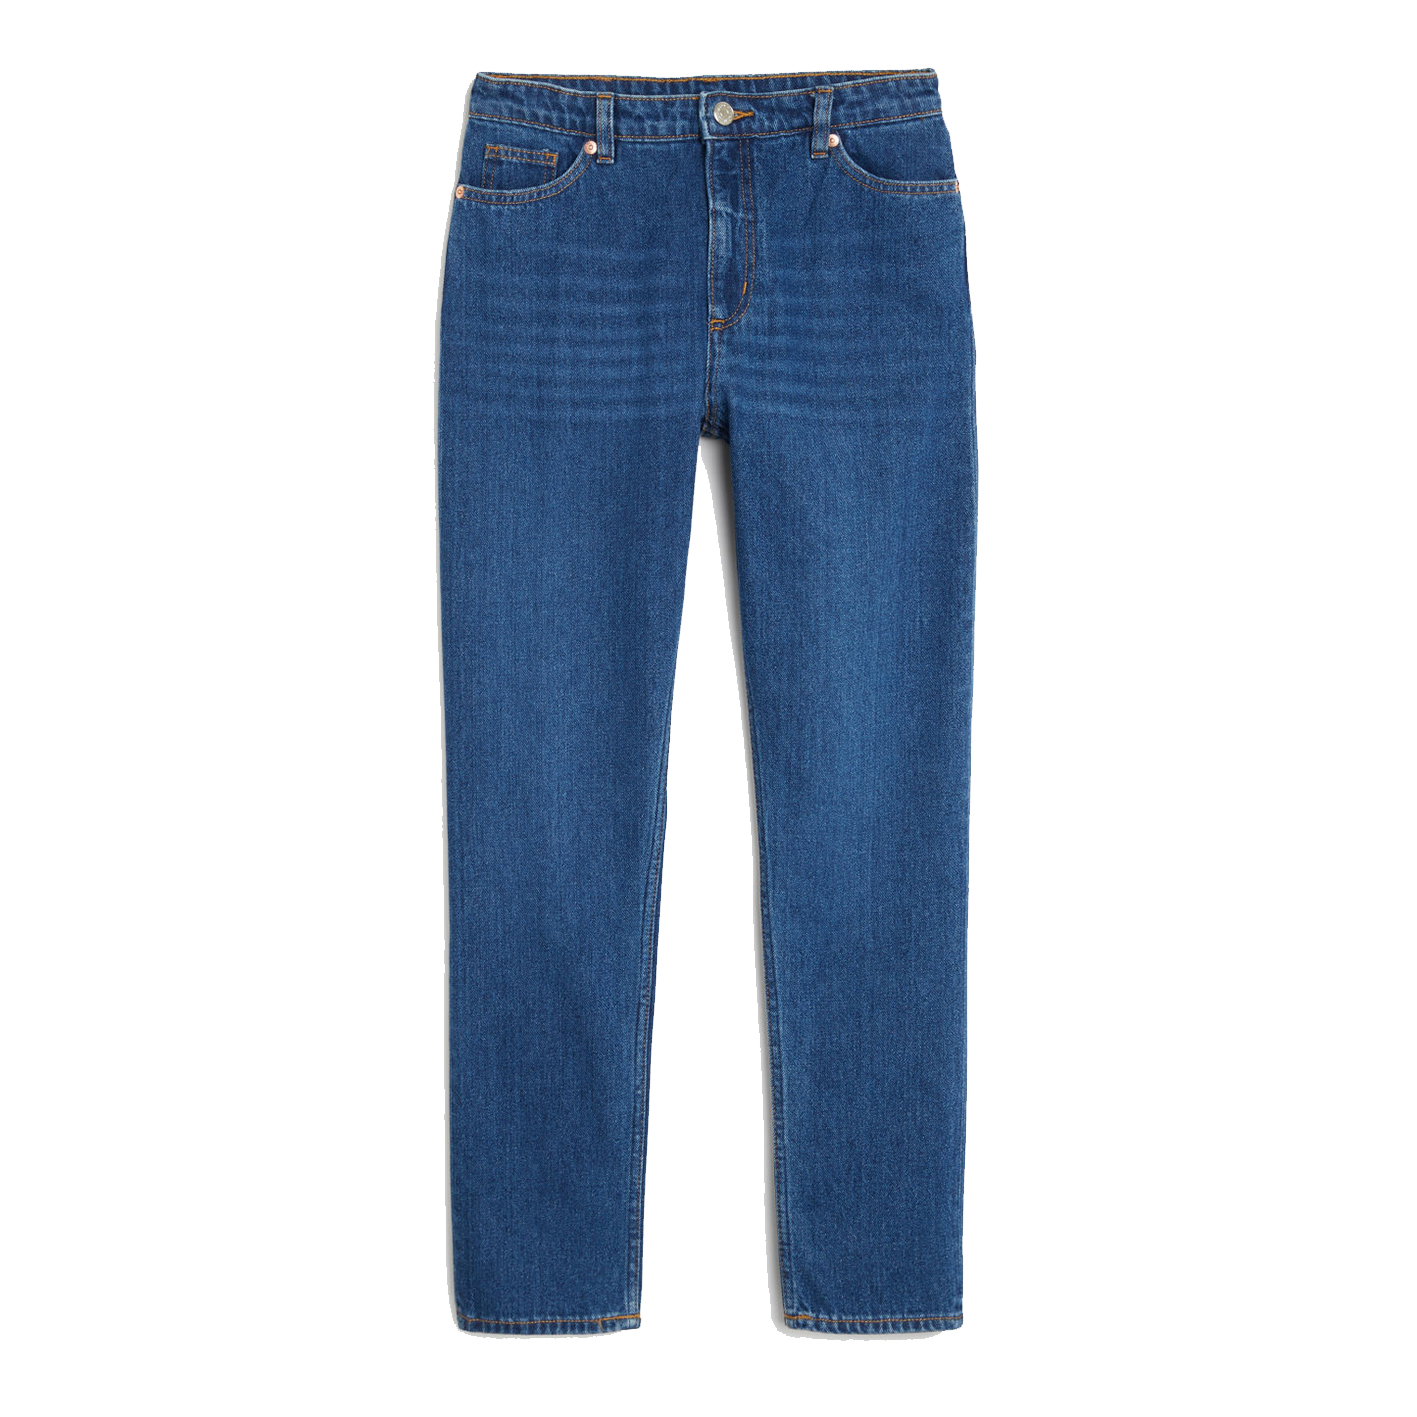 Kimomo Classic Jeans in Country Blue, £40, Monki